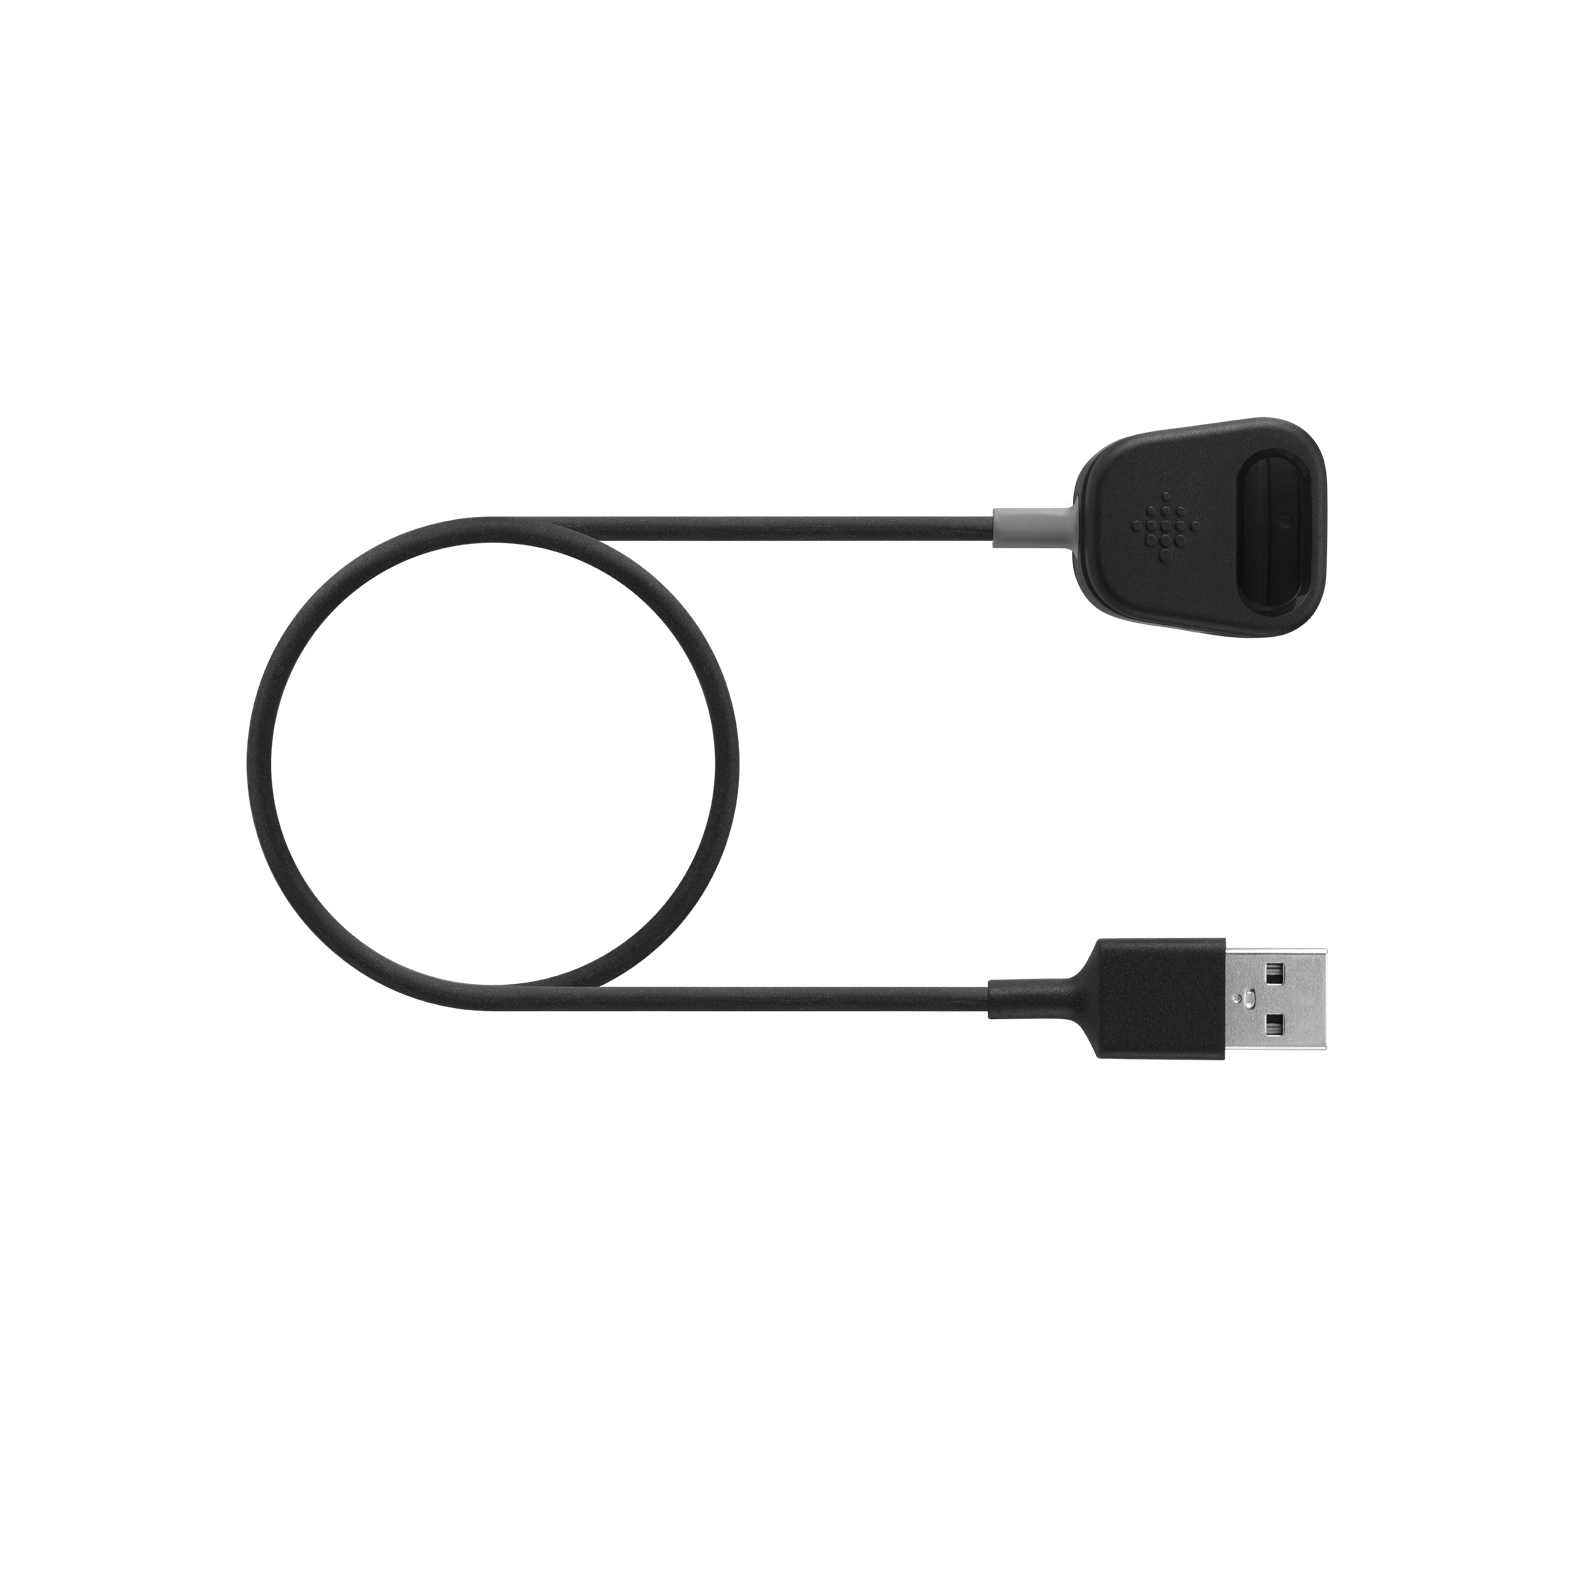 Fitness Tracker USB Ladegerät für Fitbit Charge HR Ladekabel Sport Armband 